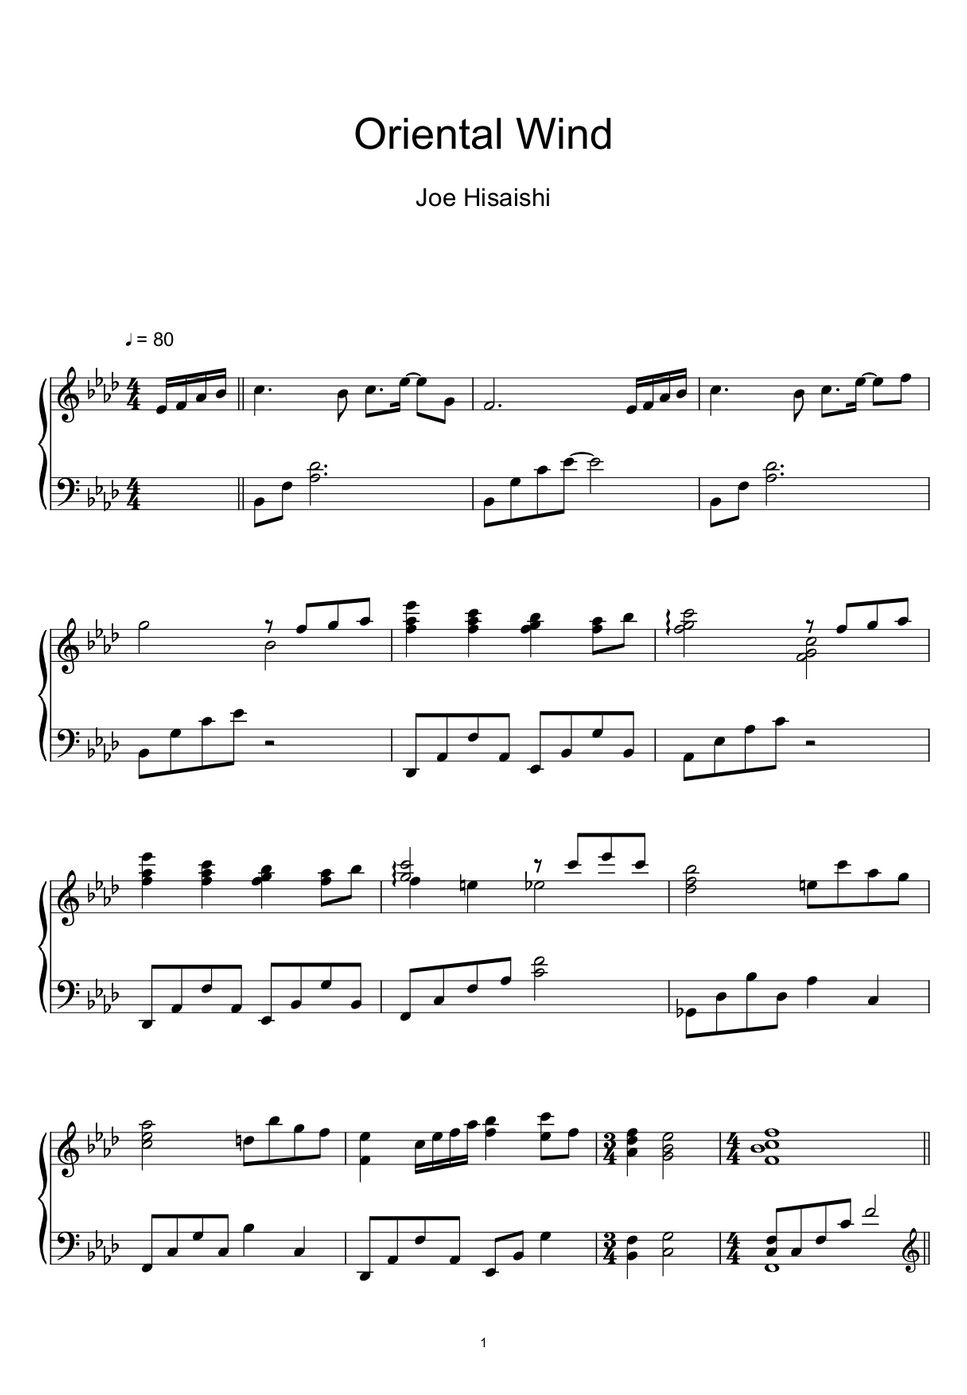 久石譲 (Joe Hisaishi) - Oriental Wind (楽譜, Sheet Music, MIDI,) by sayu